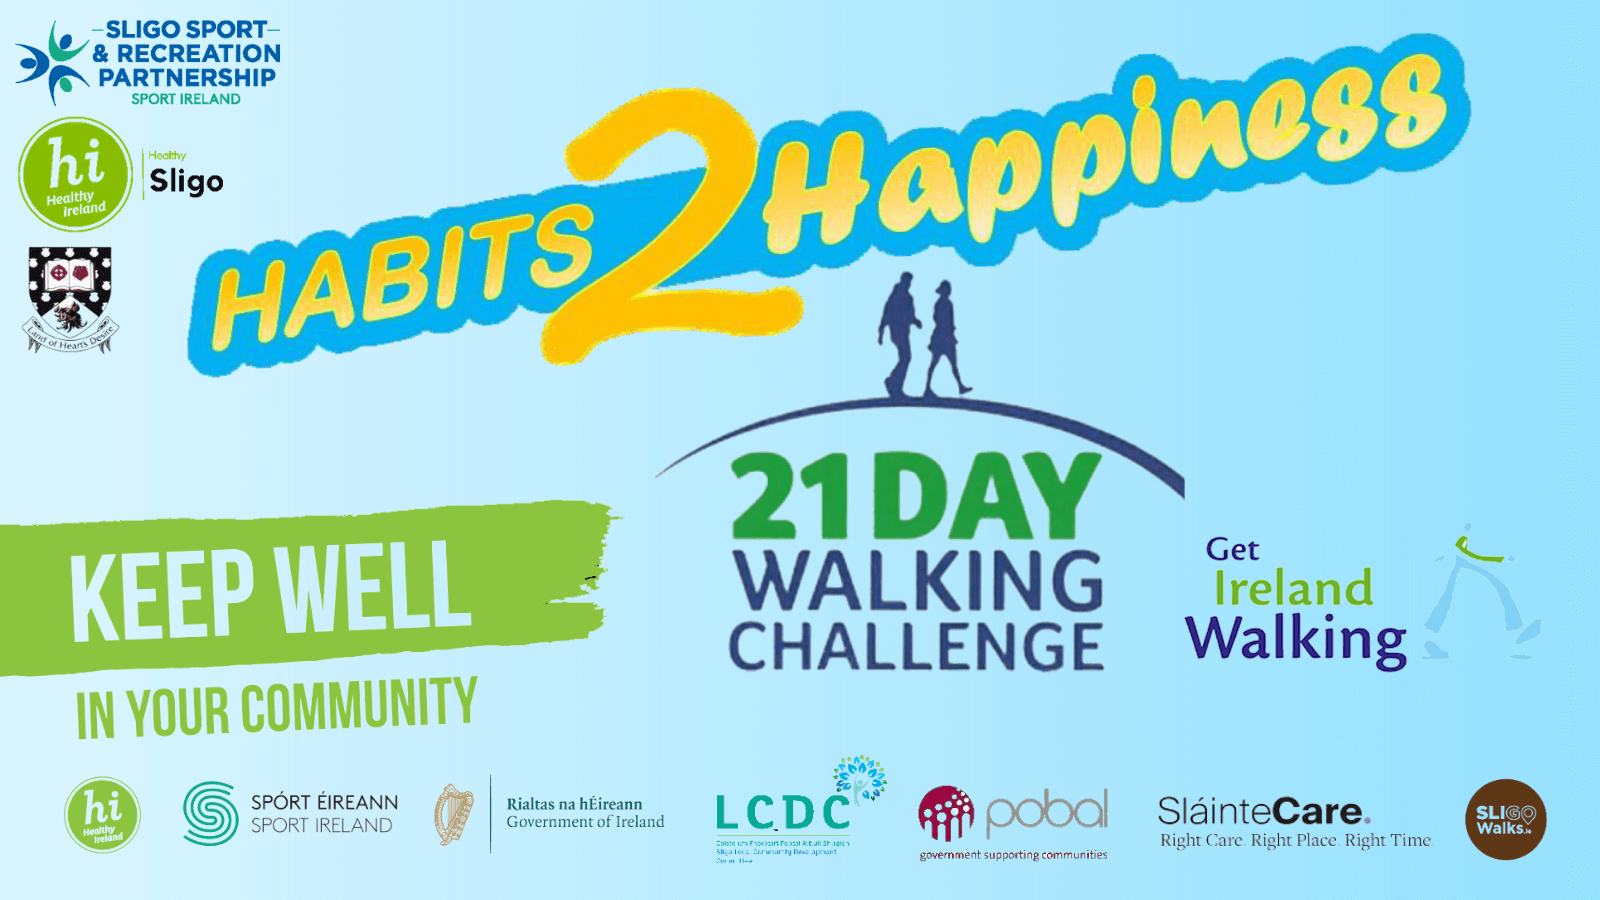 Sligo Getting Active with ‘Habits 2 Happiness’ initiative 